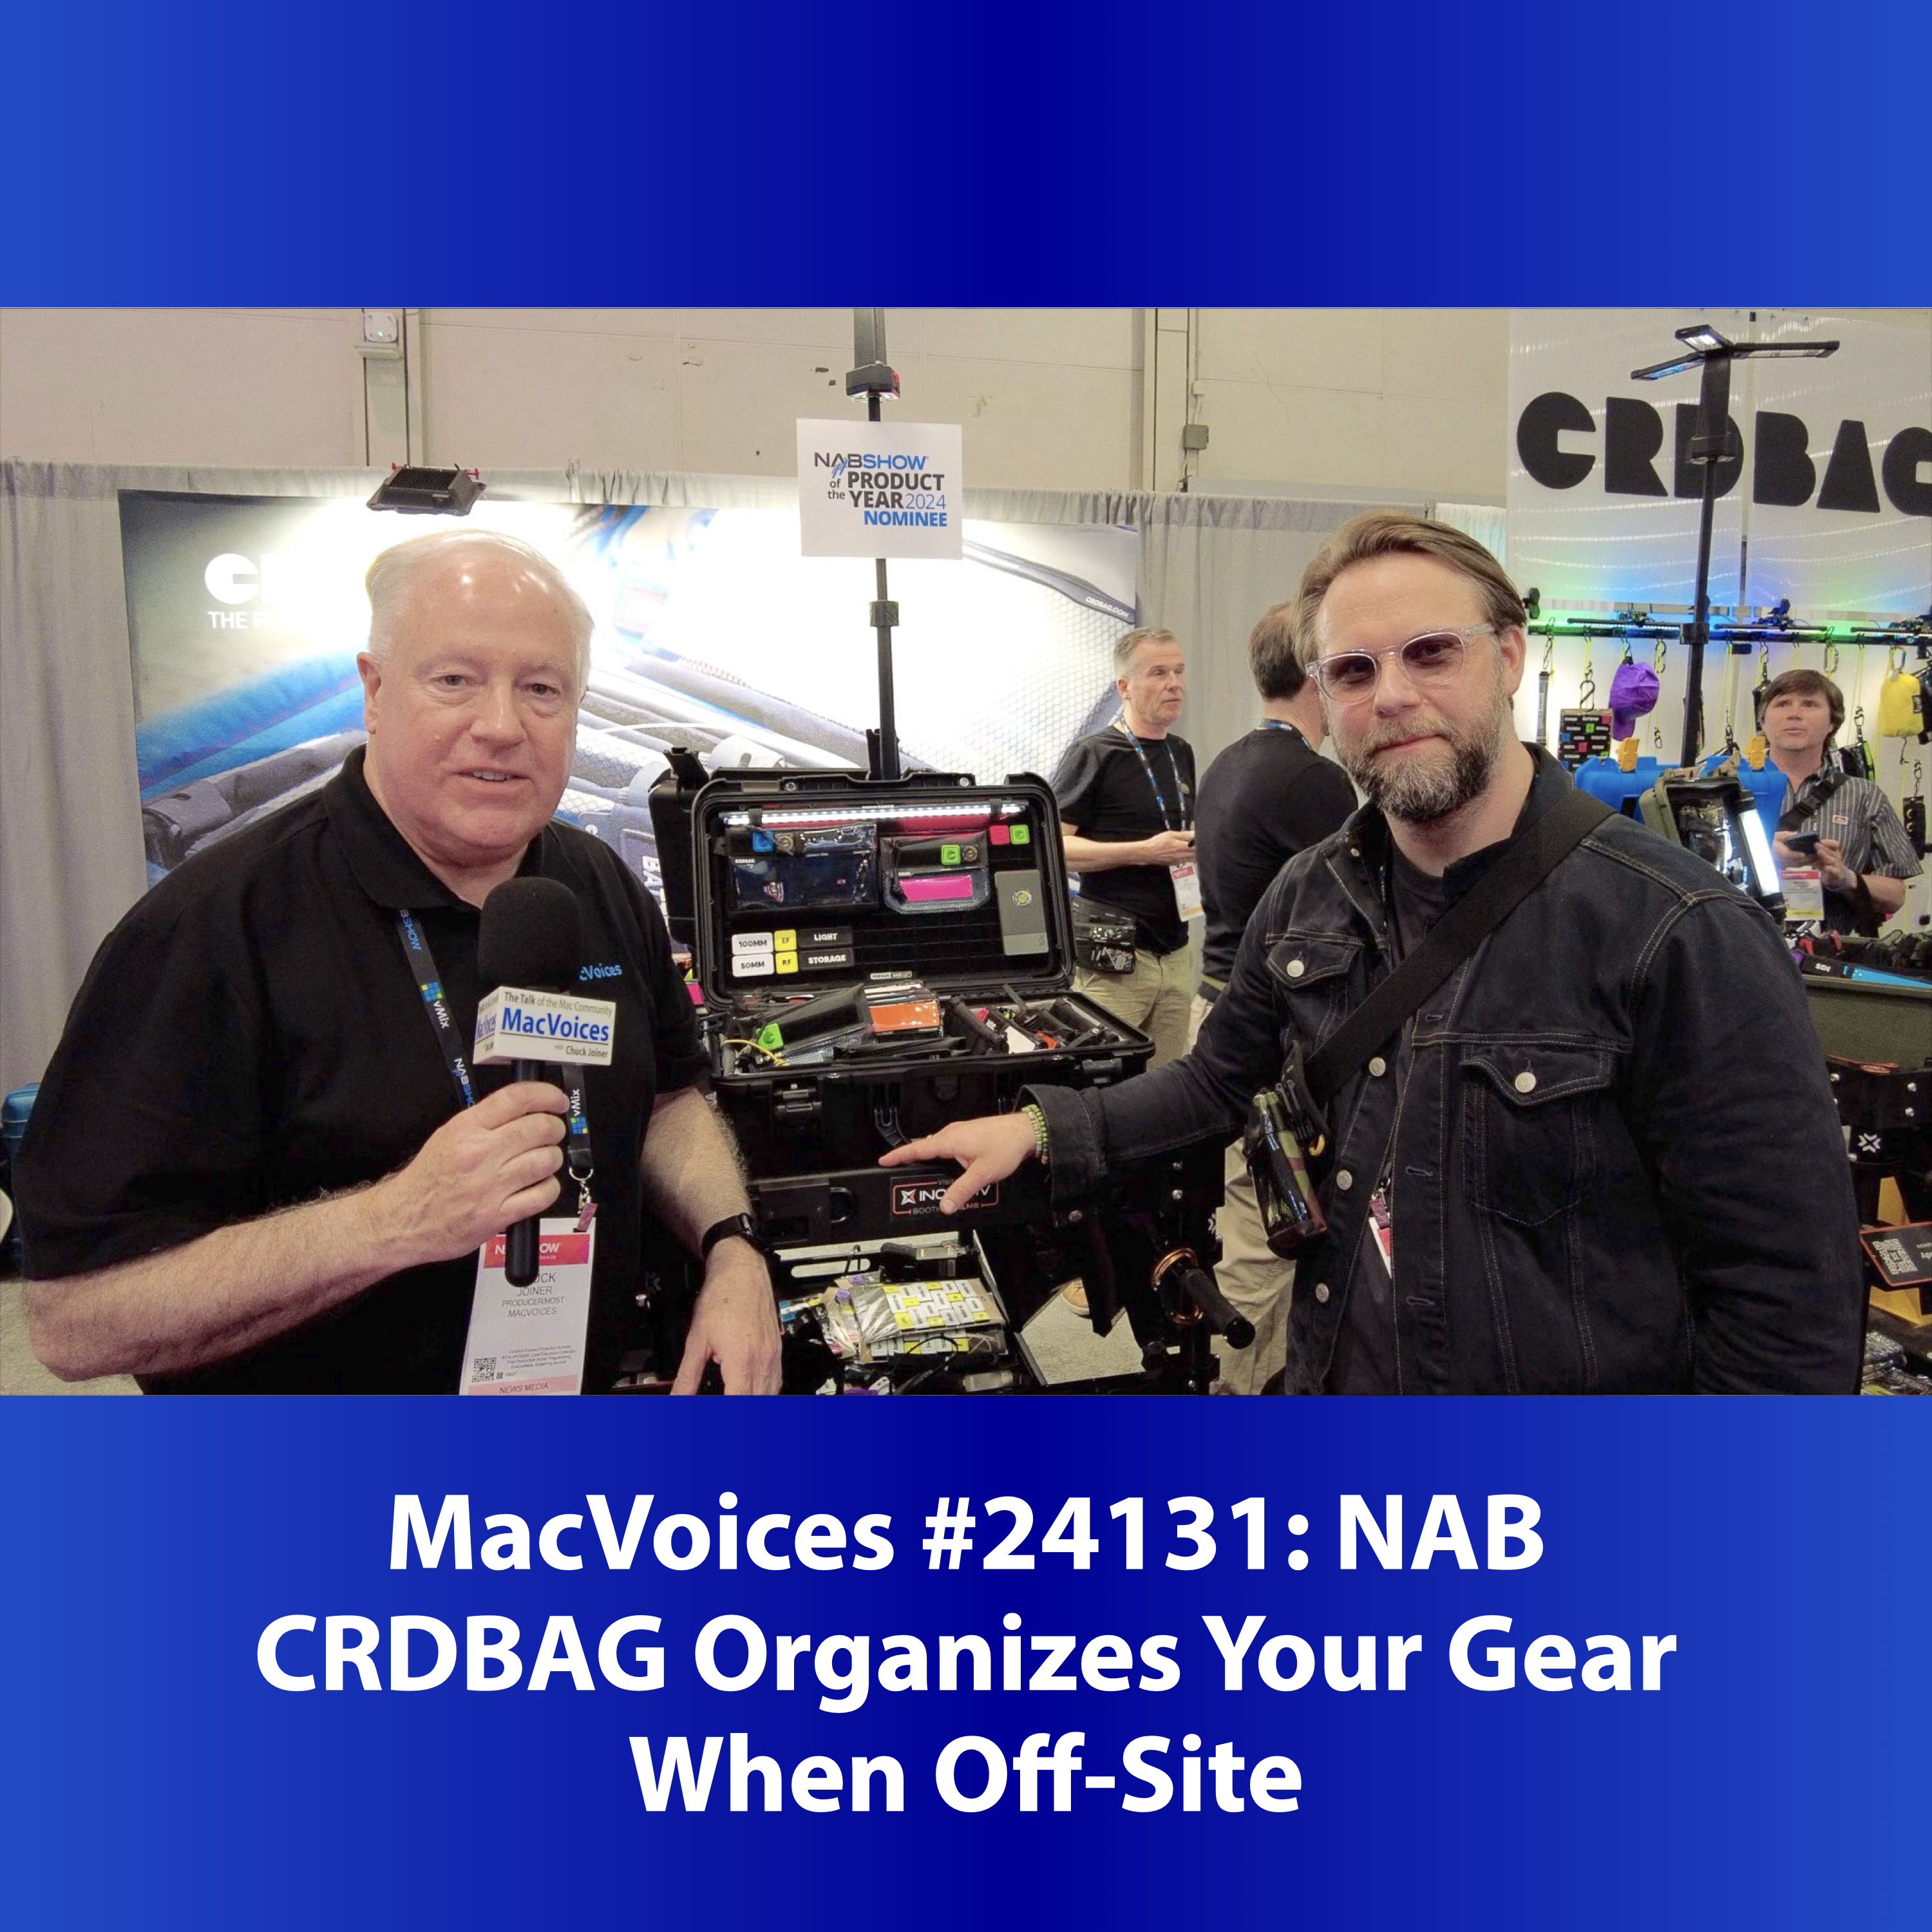 MacVoices #24131: NAB - CRDBAG Organizes Your Gear When Off-Site